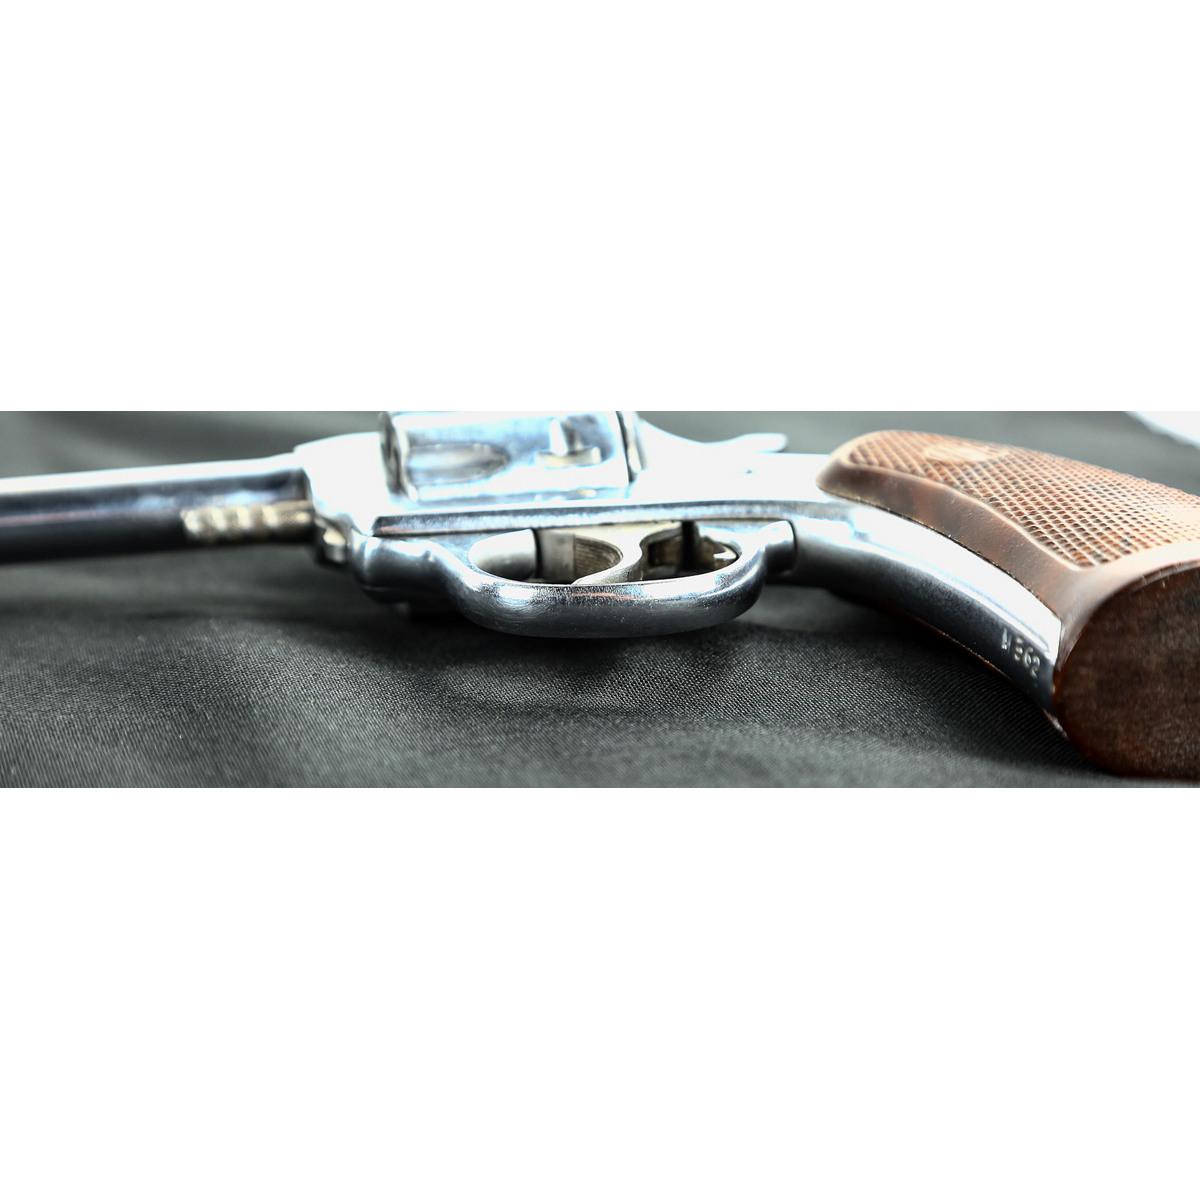 H&R Model 923 22 Cal 8 Shot DA Revolver